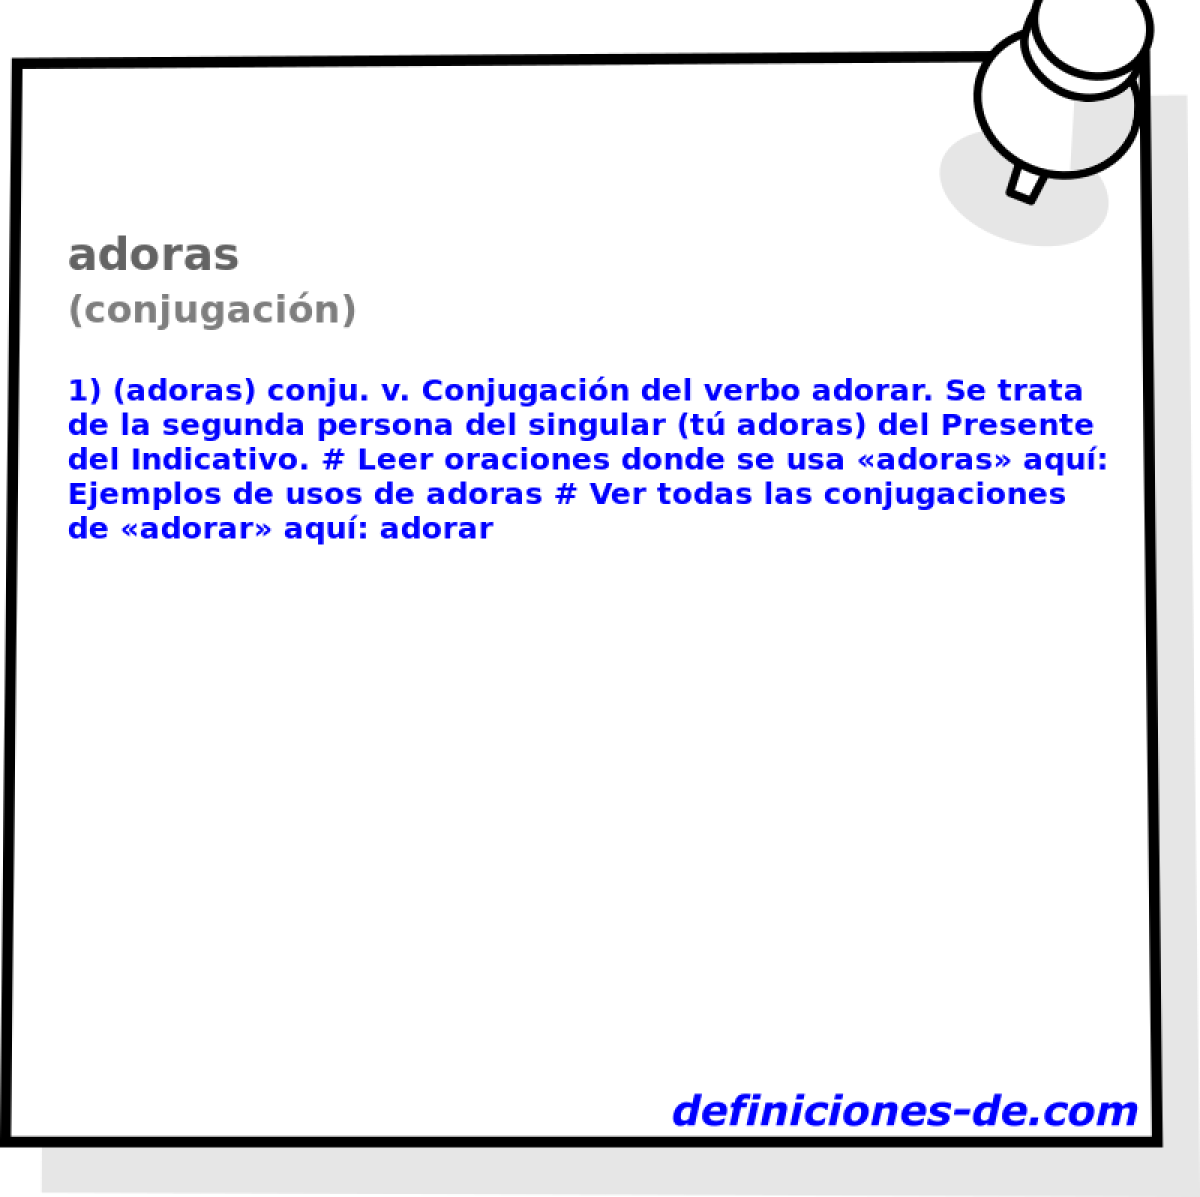 adoras (conjugacin)